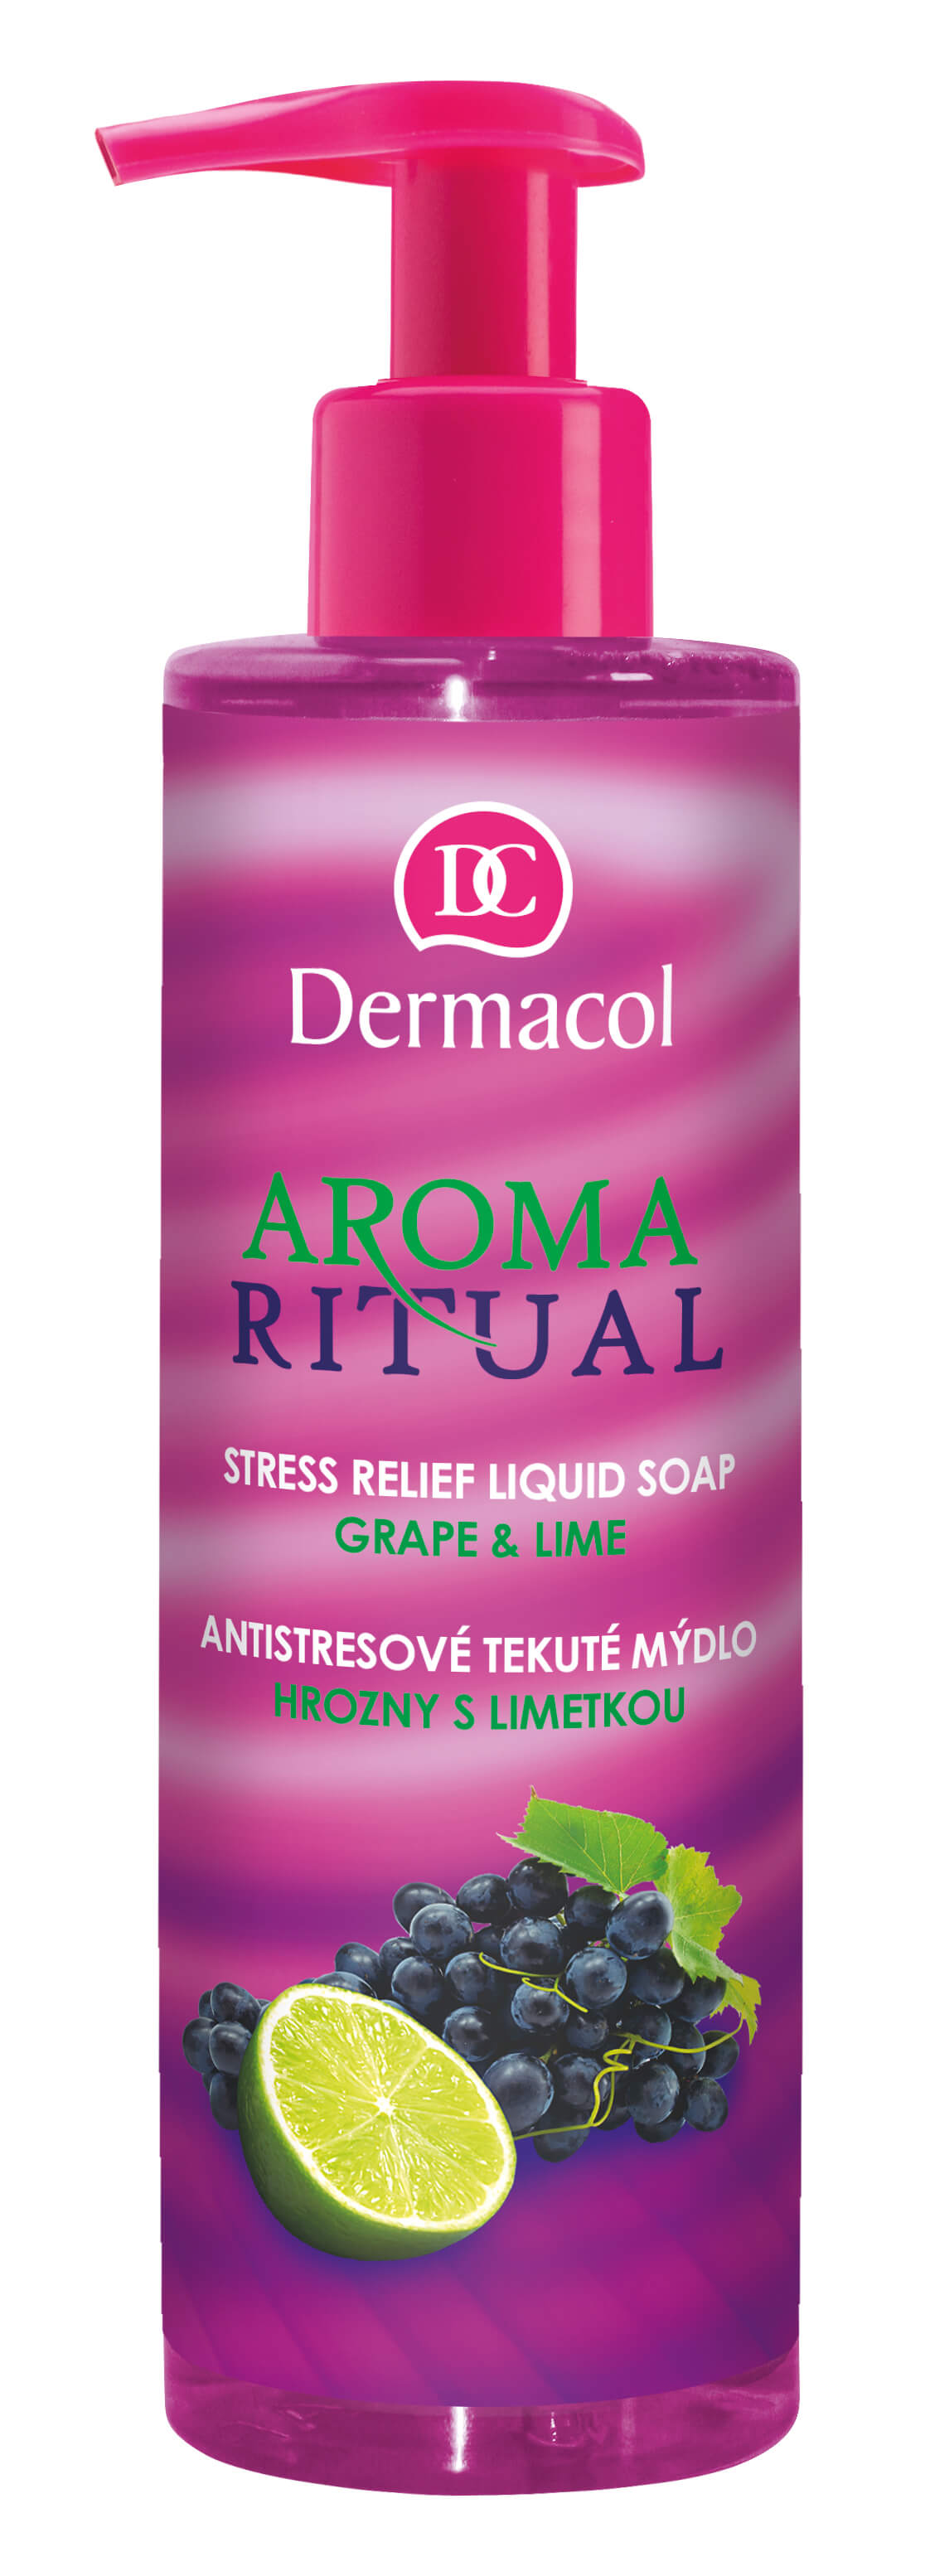 Dermacol Antistresové tekuté mýdlo hrozny s limetkou Aroma Ritual (Stress Relief Liquid Soap) 250 ml